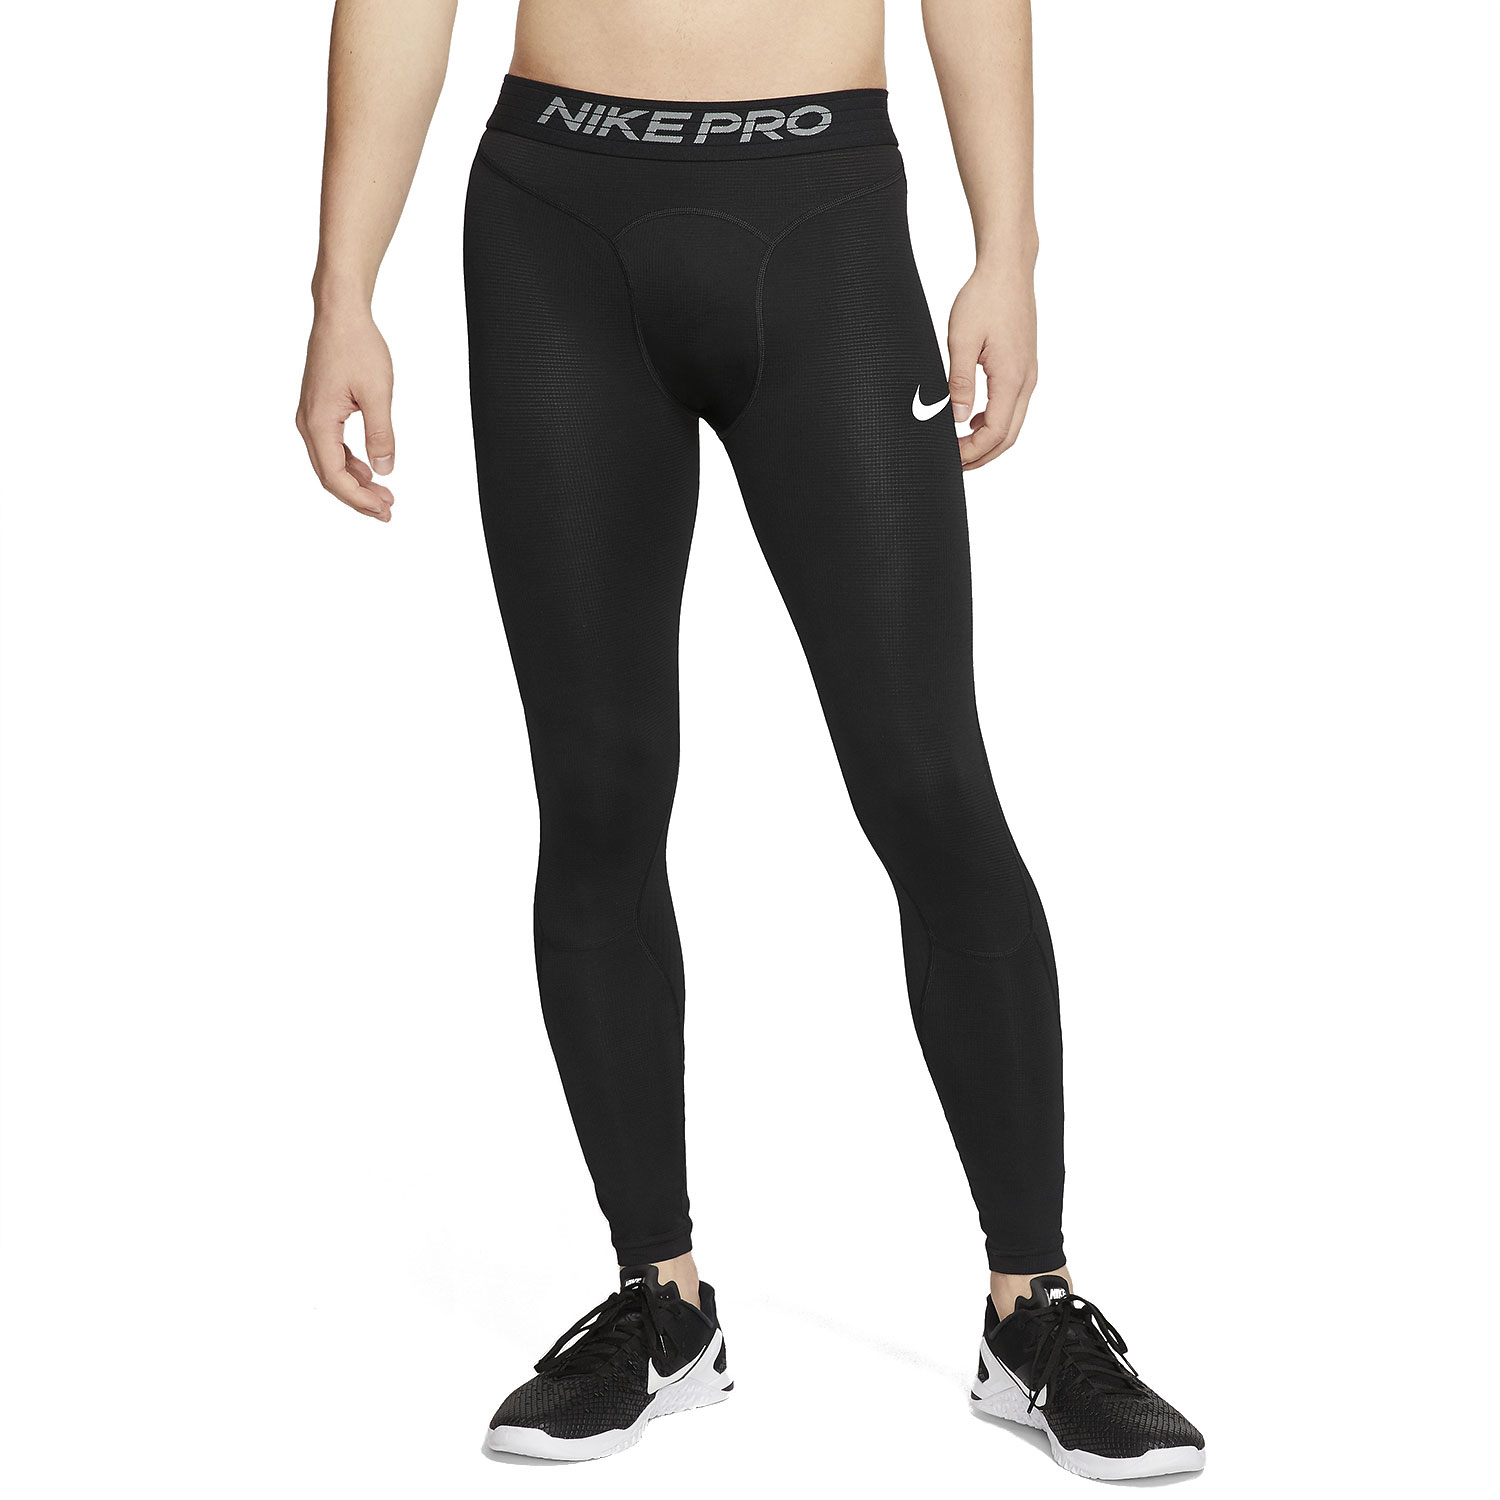 Nike Pro Breathe Men's Underwear Tights - Black/White